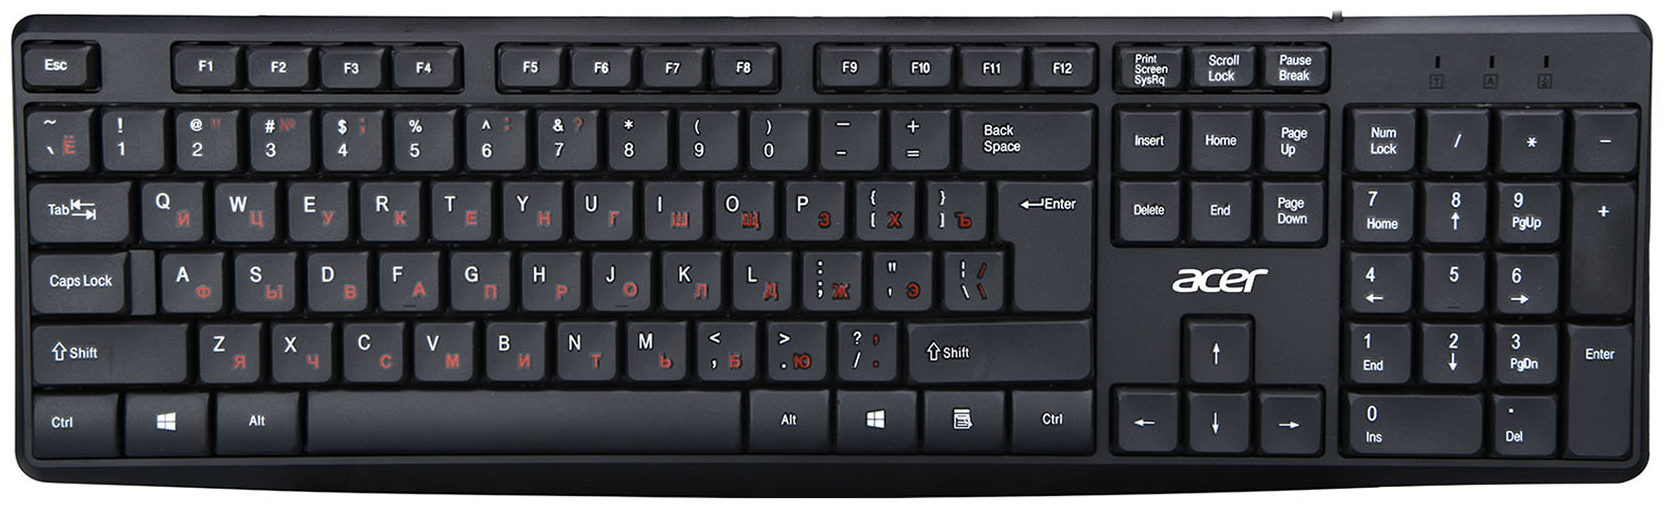 Клавиатура + мышь Acer OMW141 клав:черный мышь:черный USB (zl.mceee.01m)